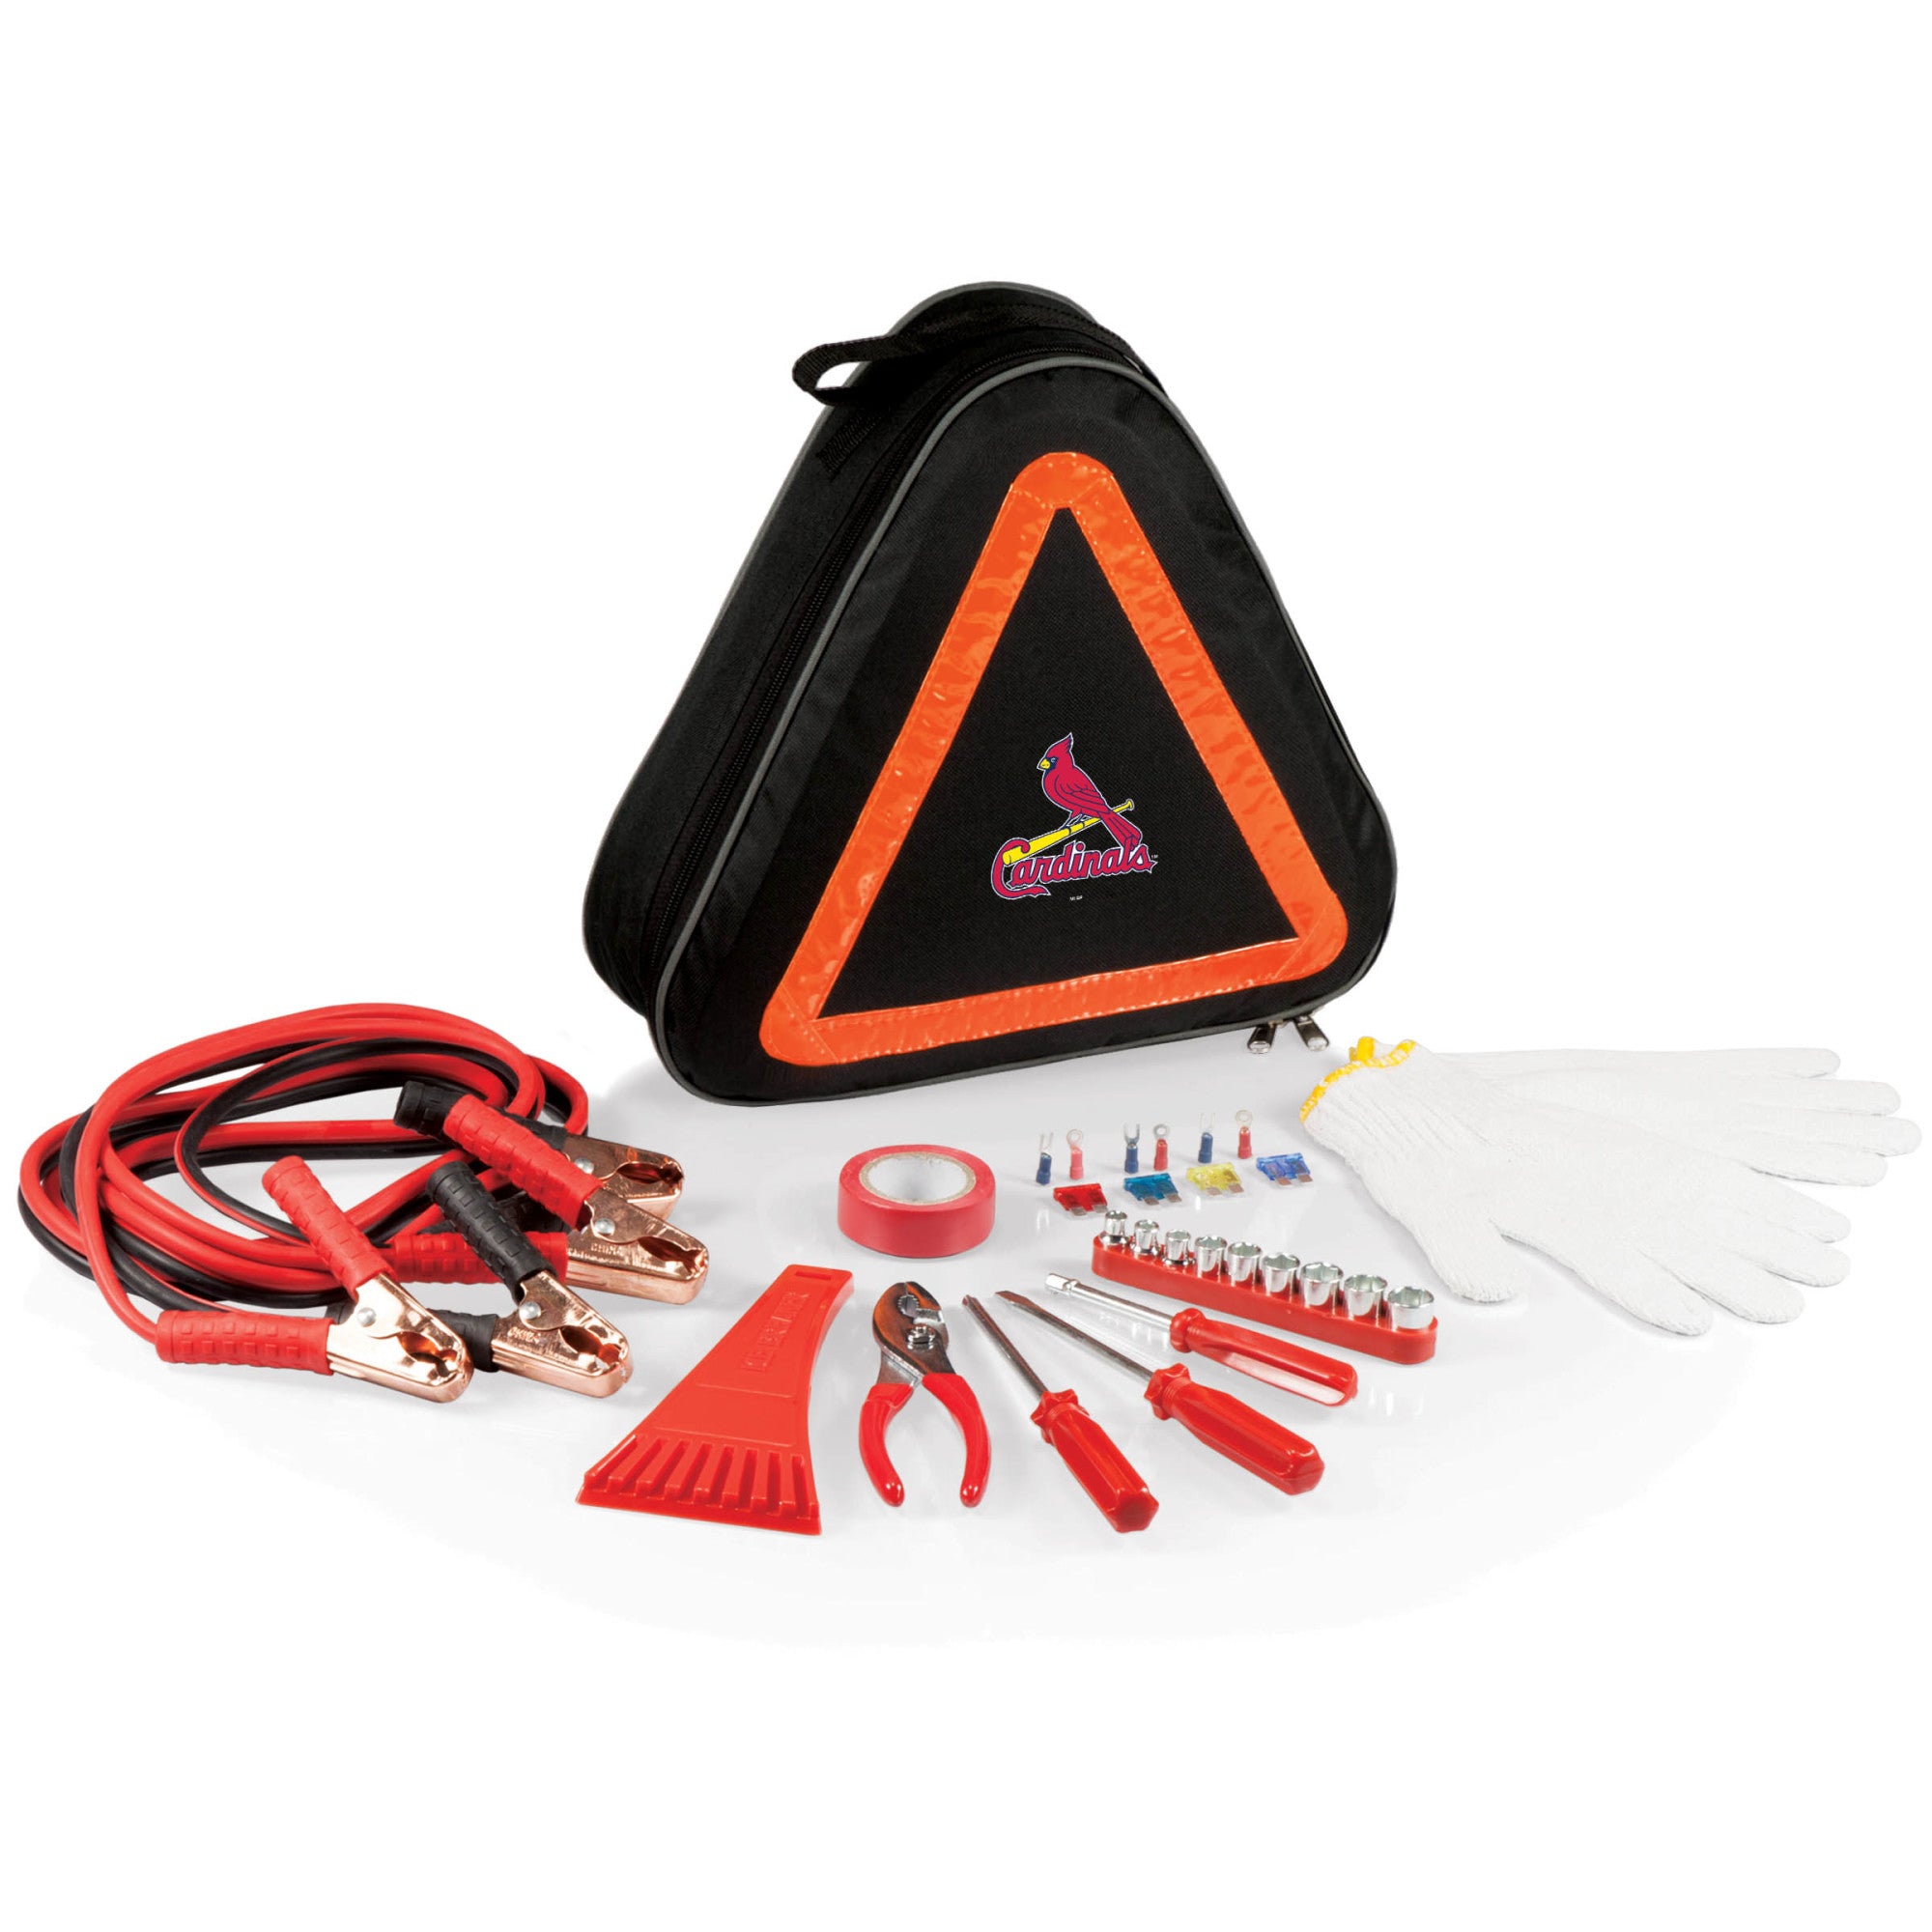 St. Louis Cardinals - Roadside Emergency Car Kit